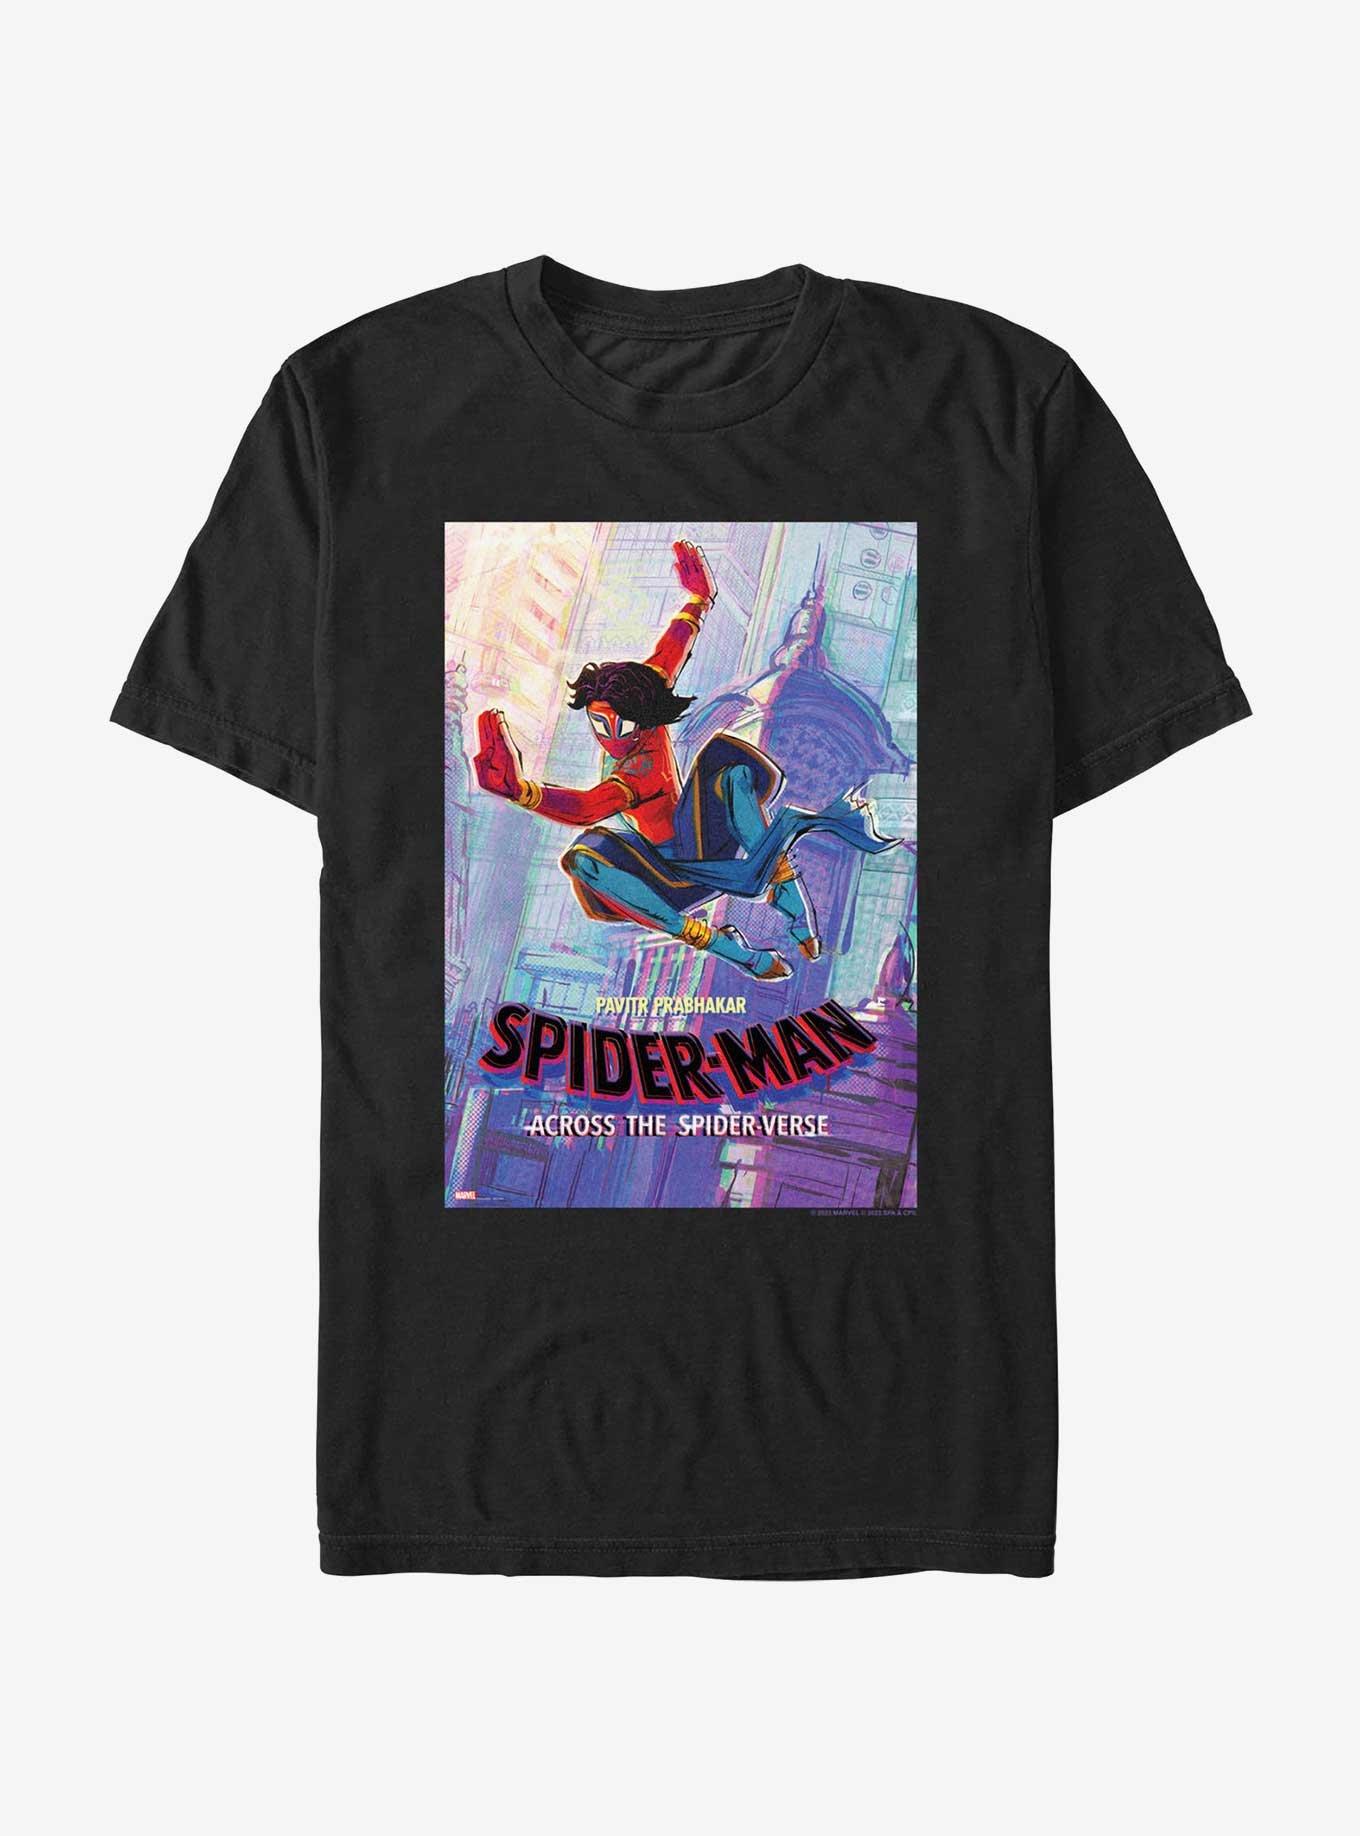 Spider-Man: Across The Spider-Verse Pavitr Prabhakar Poster T-Shirt, , hi-res